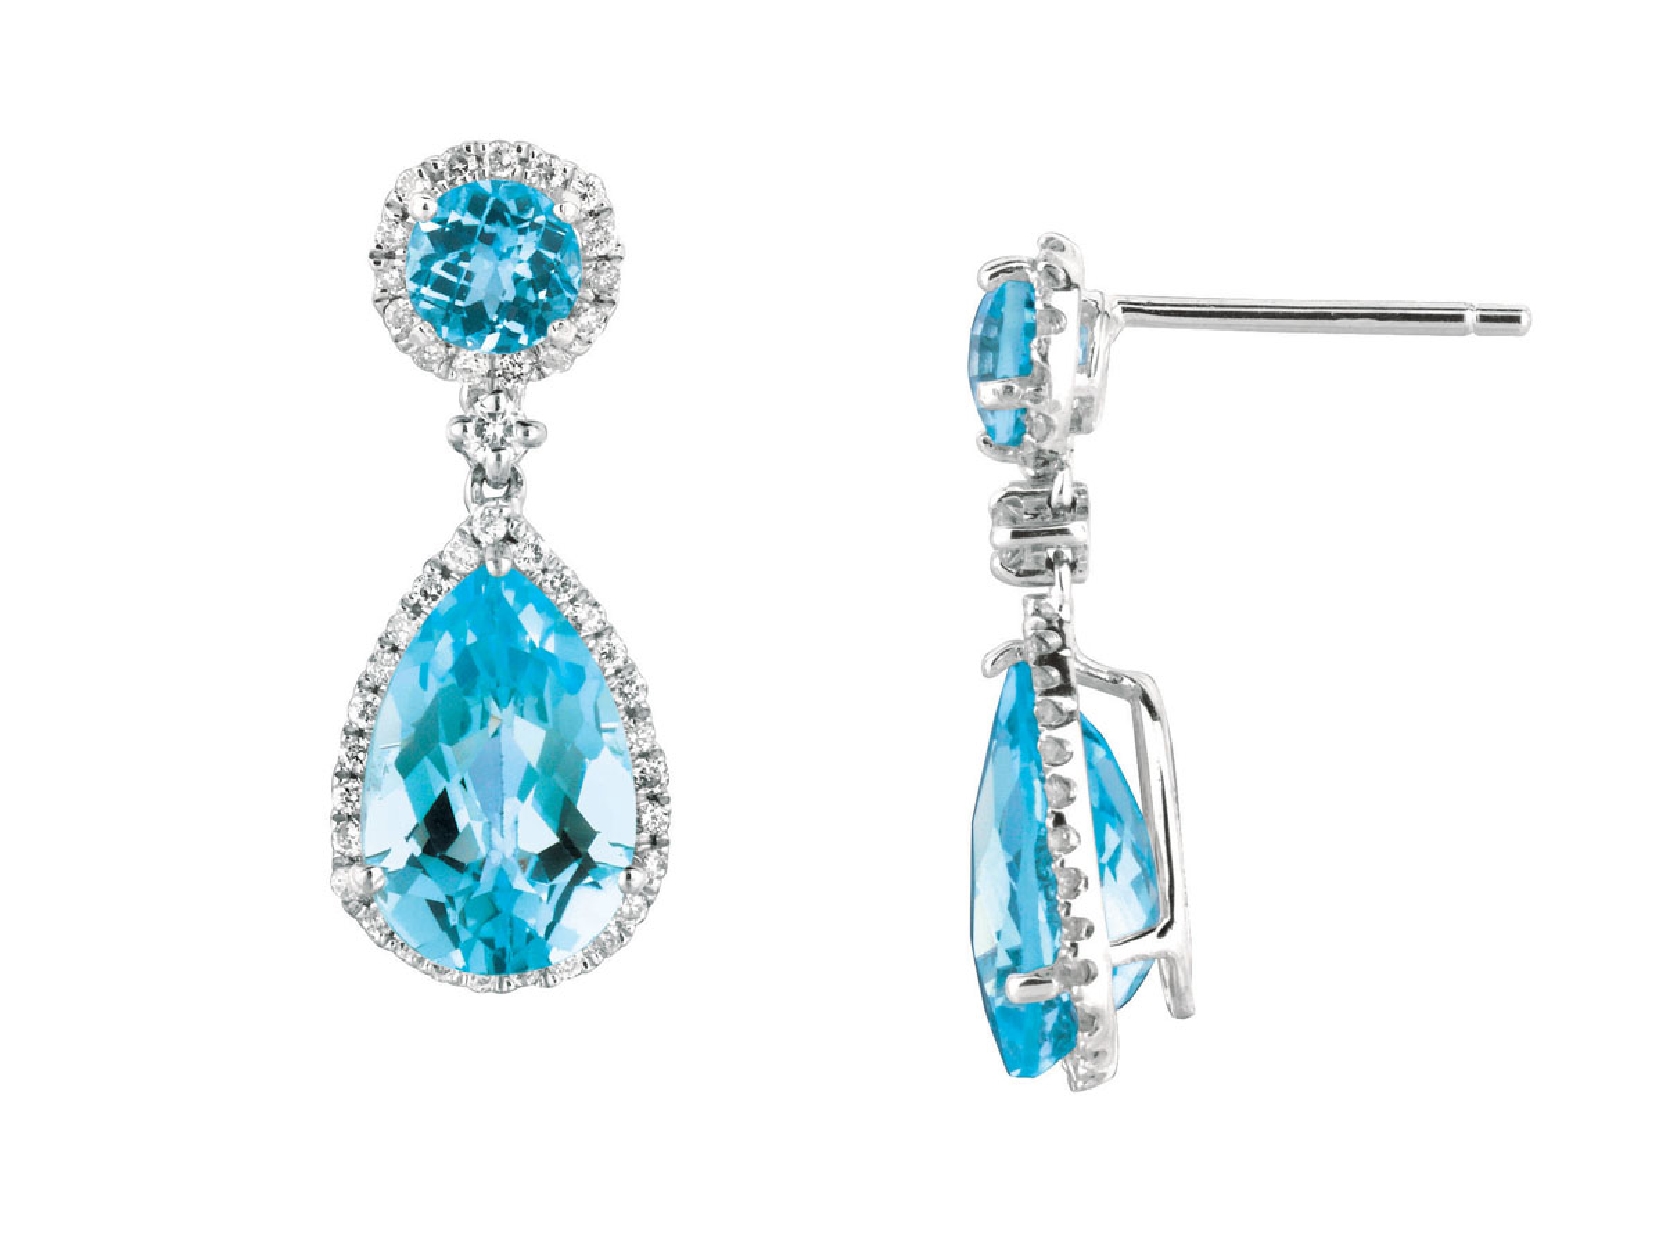 14k White Gold Pear Shaped Blue Topaz Drop Earrings with Diamond Accents 

7.8cttw Blue Topaz
0.5cttw Diamonds